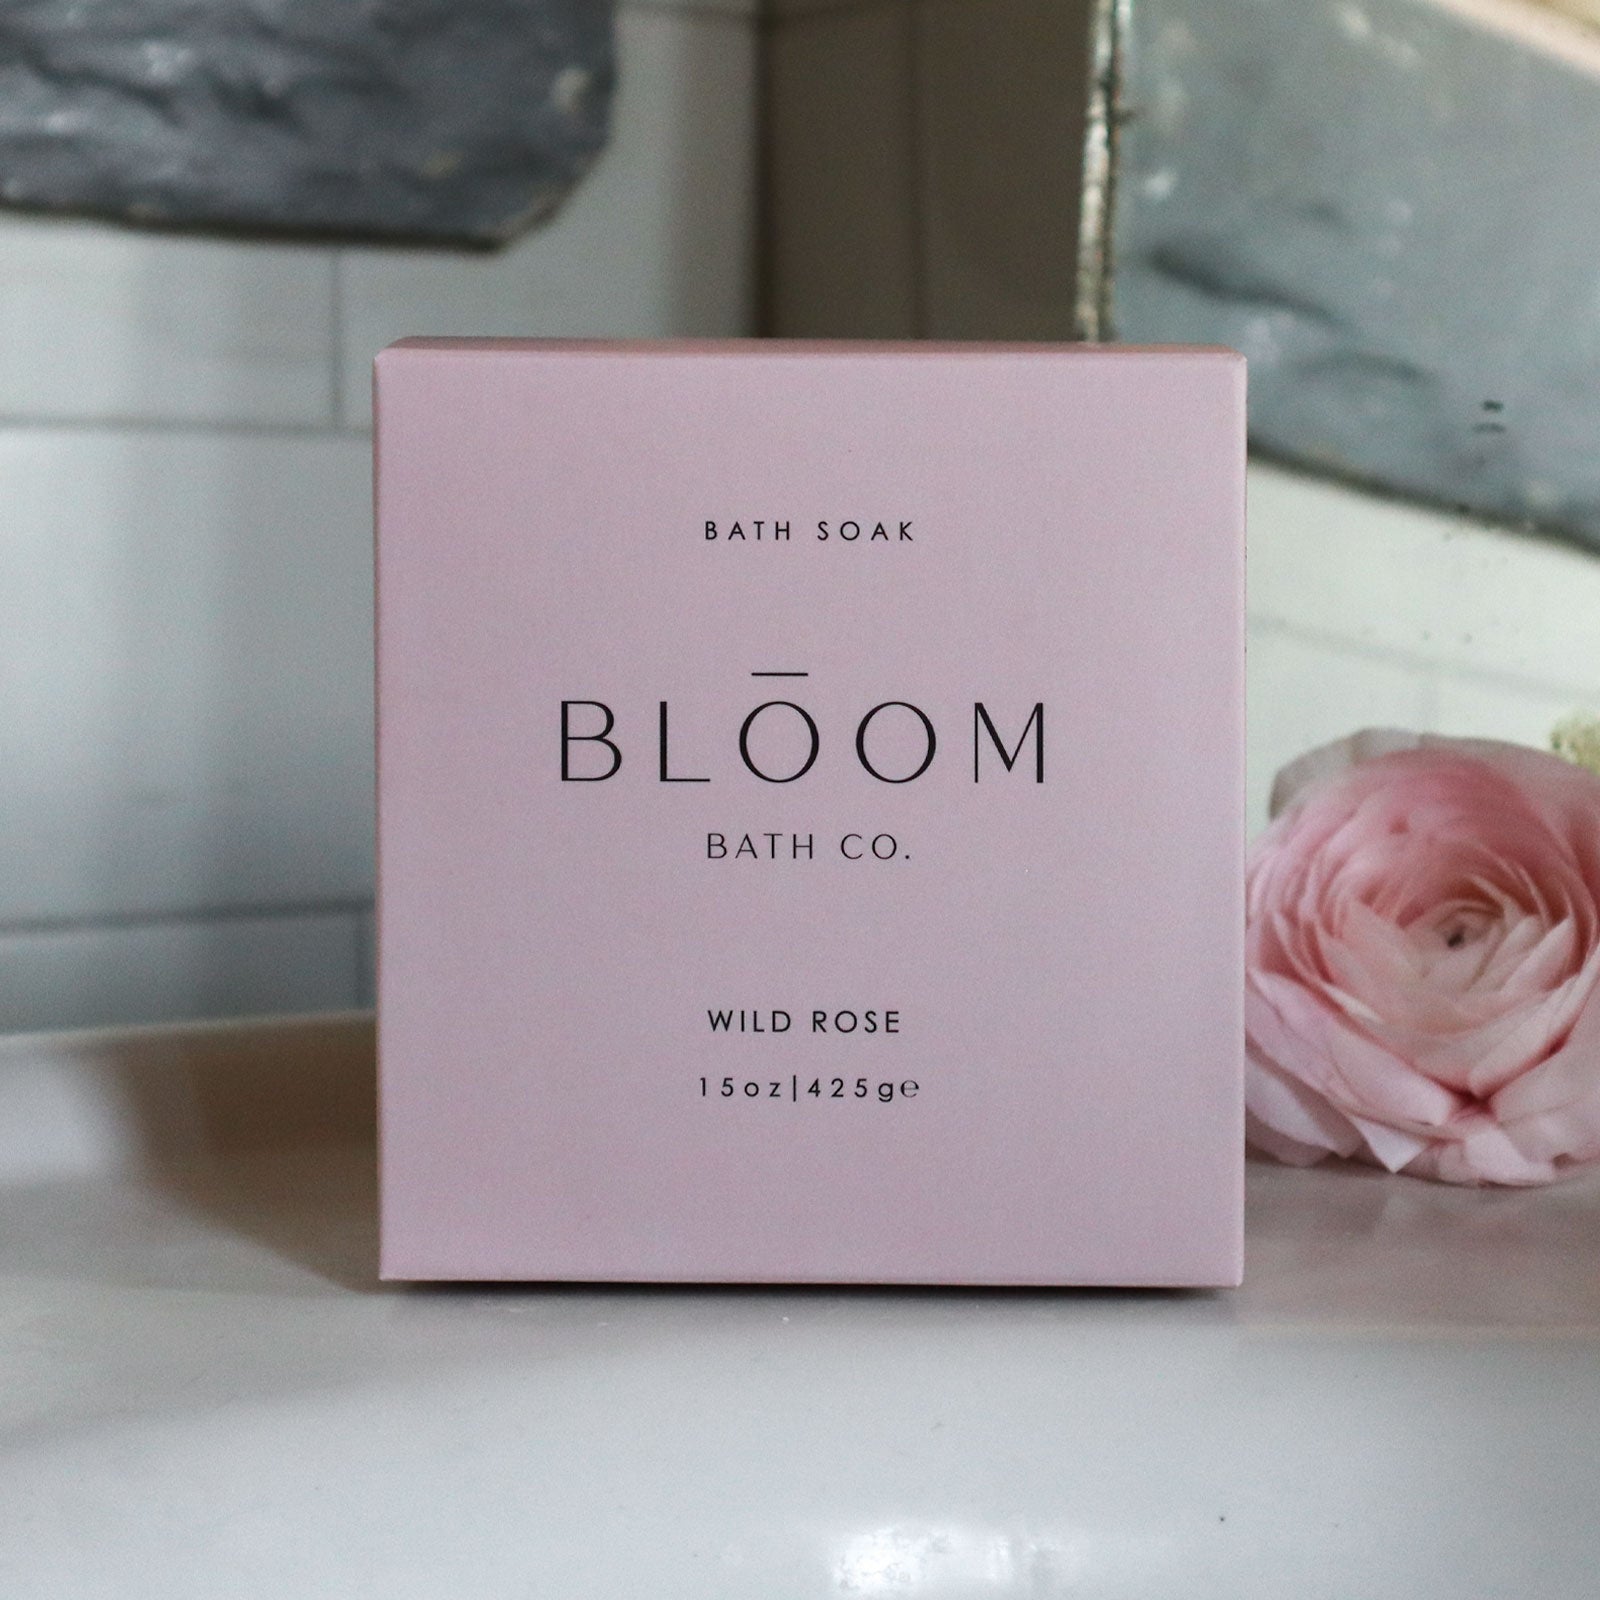 Bloom Bath Co. Wild Rose Bath Soak